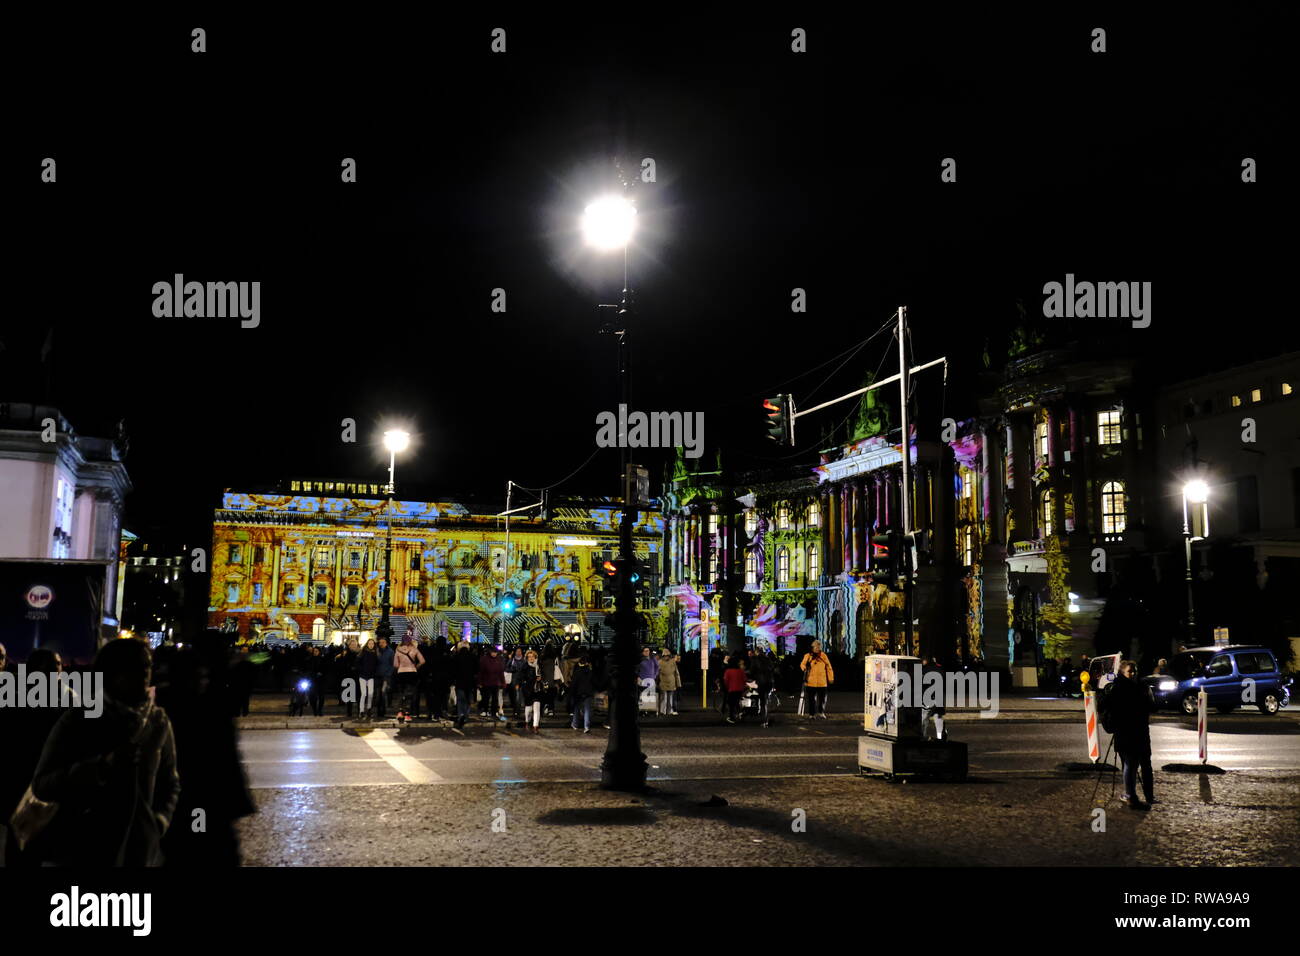 Festival der Lichter, Hotel de Rome, Bebelplatz, Berlin, Deutschland Stockfoto